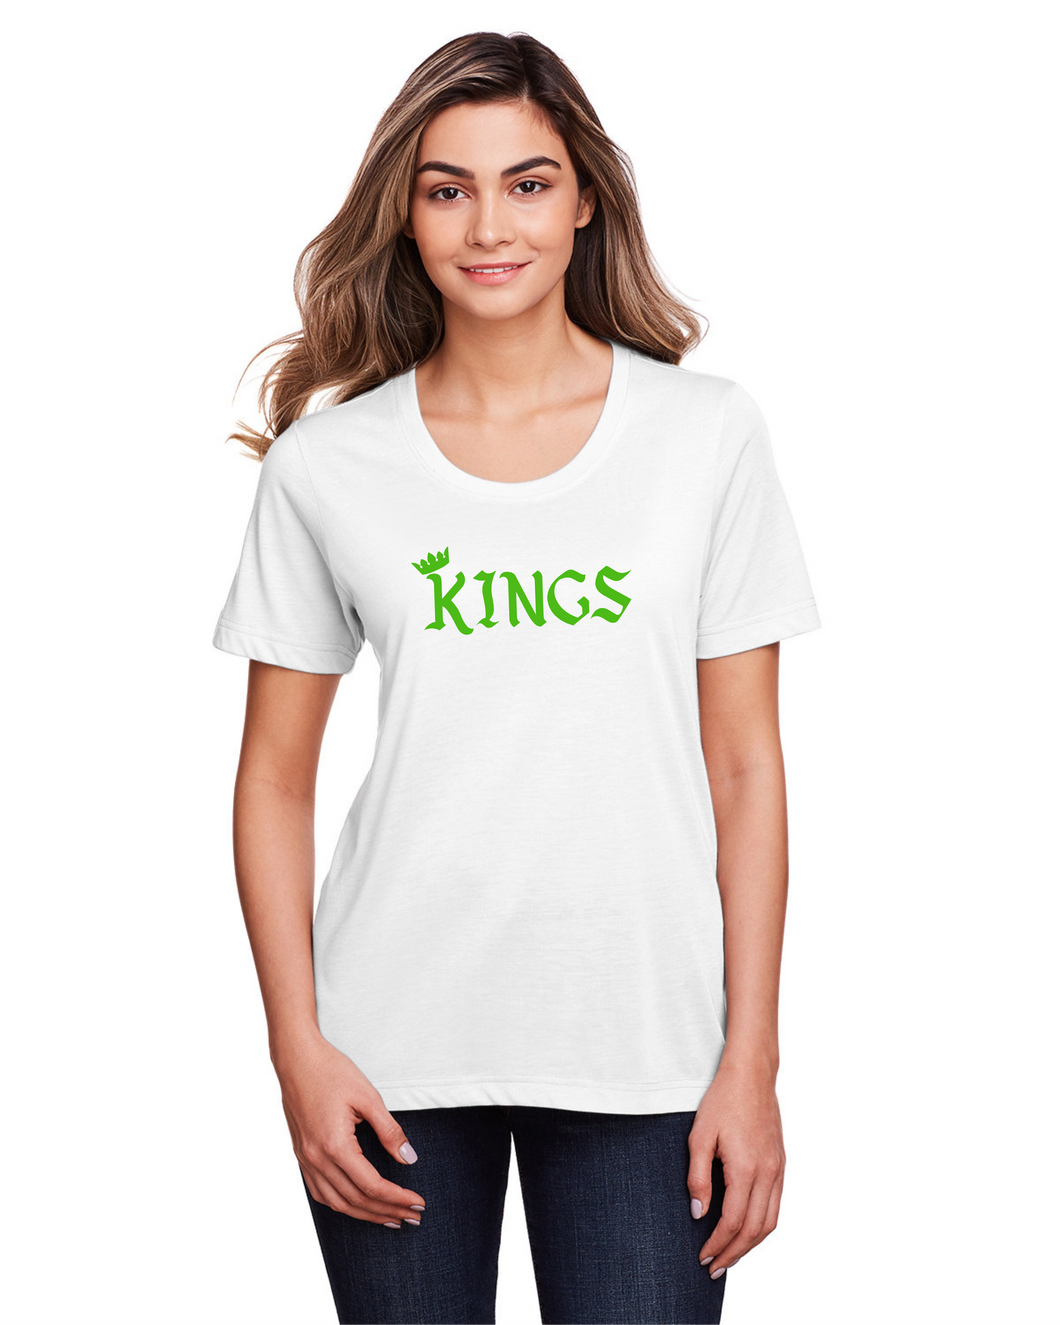 ATL-KINGS-631-2 - Core 365 Adult Fusion ChromaSoft Performance Short Sleeve T-Shirt - Kings Logo